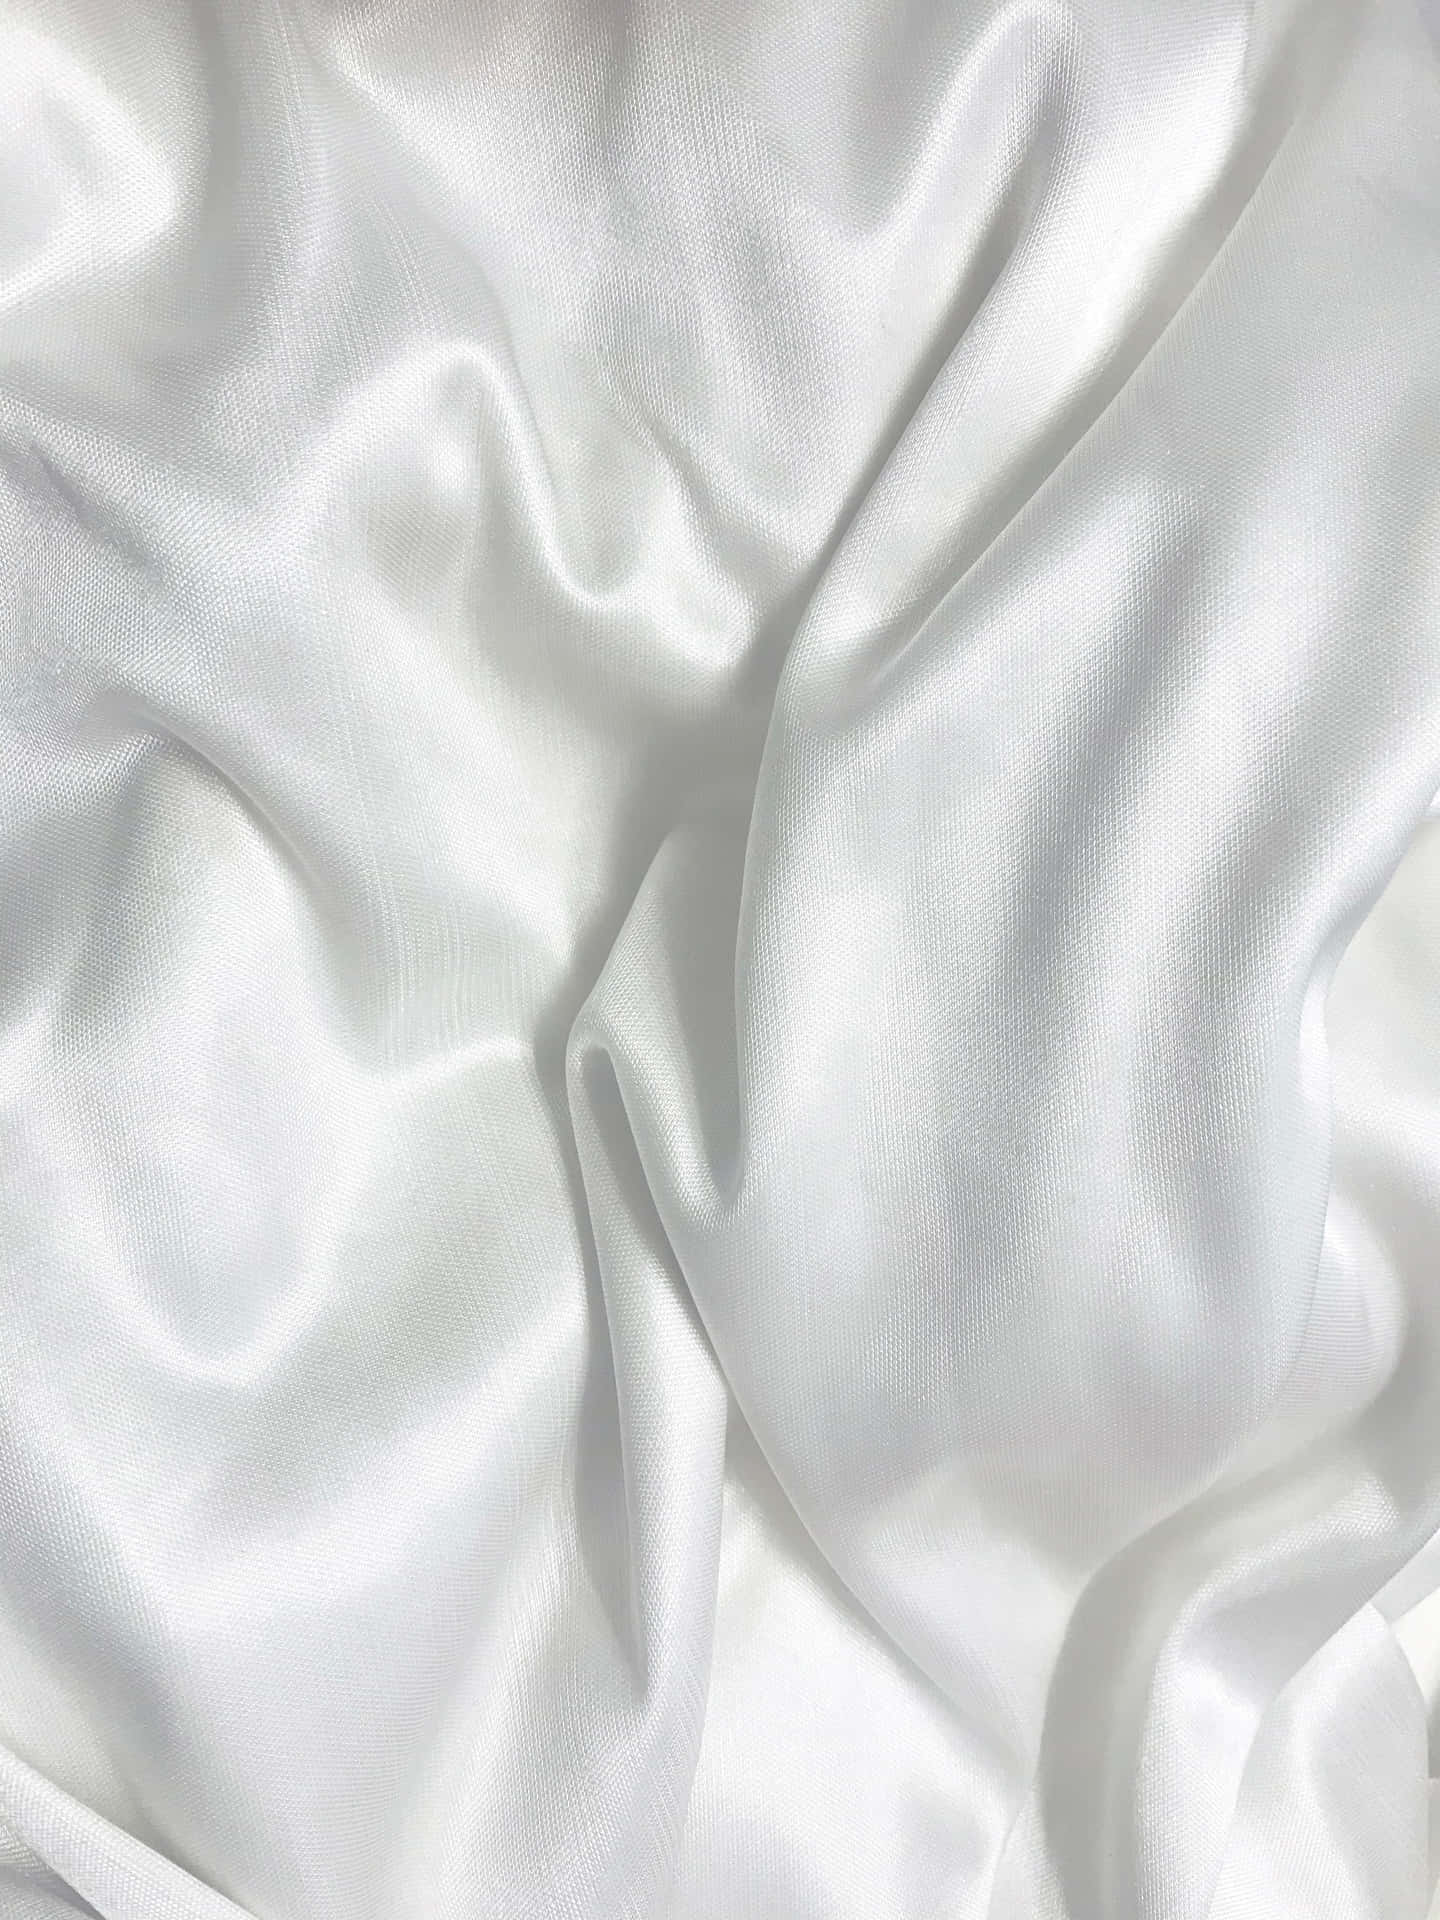 Simplicity In White Silk Background